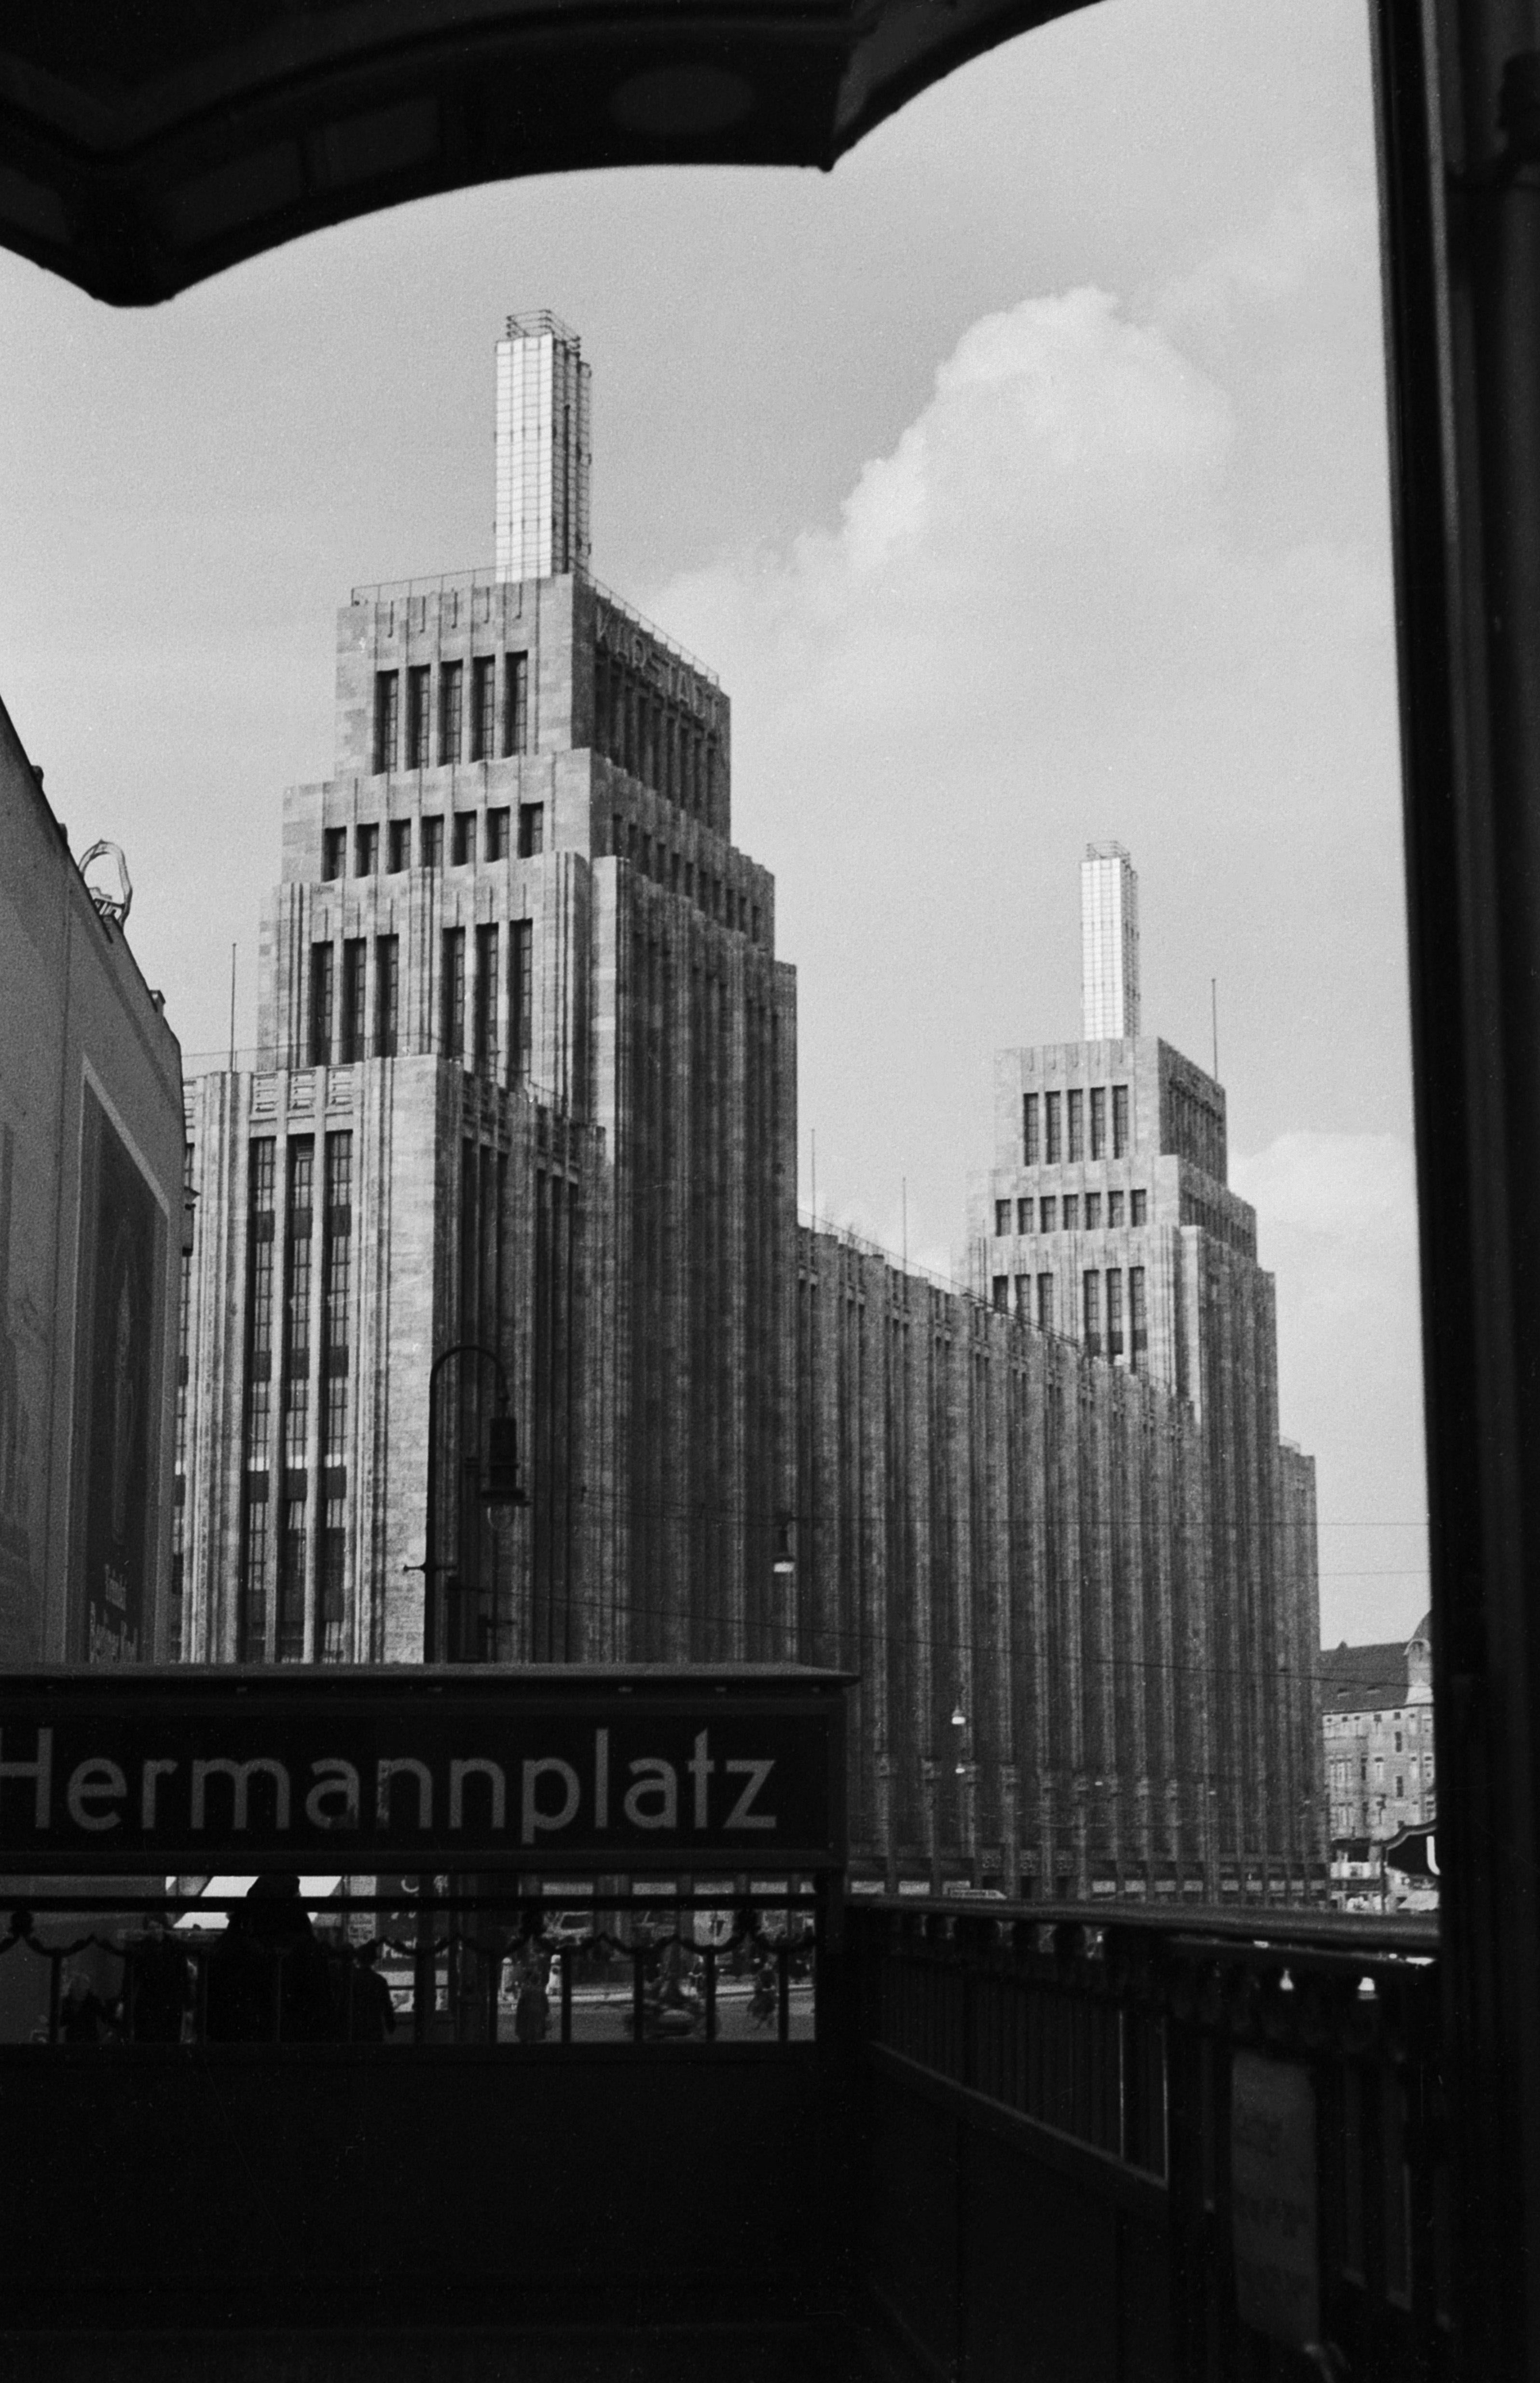 Heinz Pollmann Landscape Photograph - Karstadt-Haus at Hermannplatz, Berlin, 1937, Mauritius Publishing